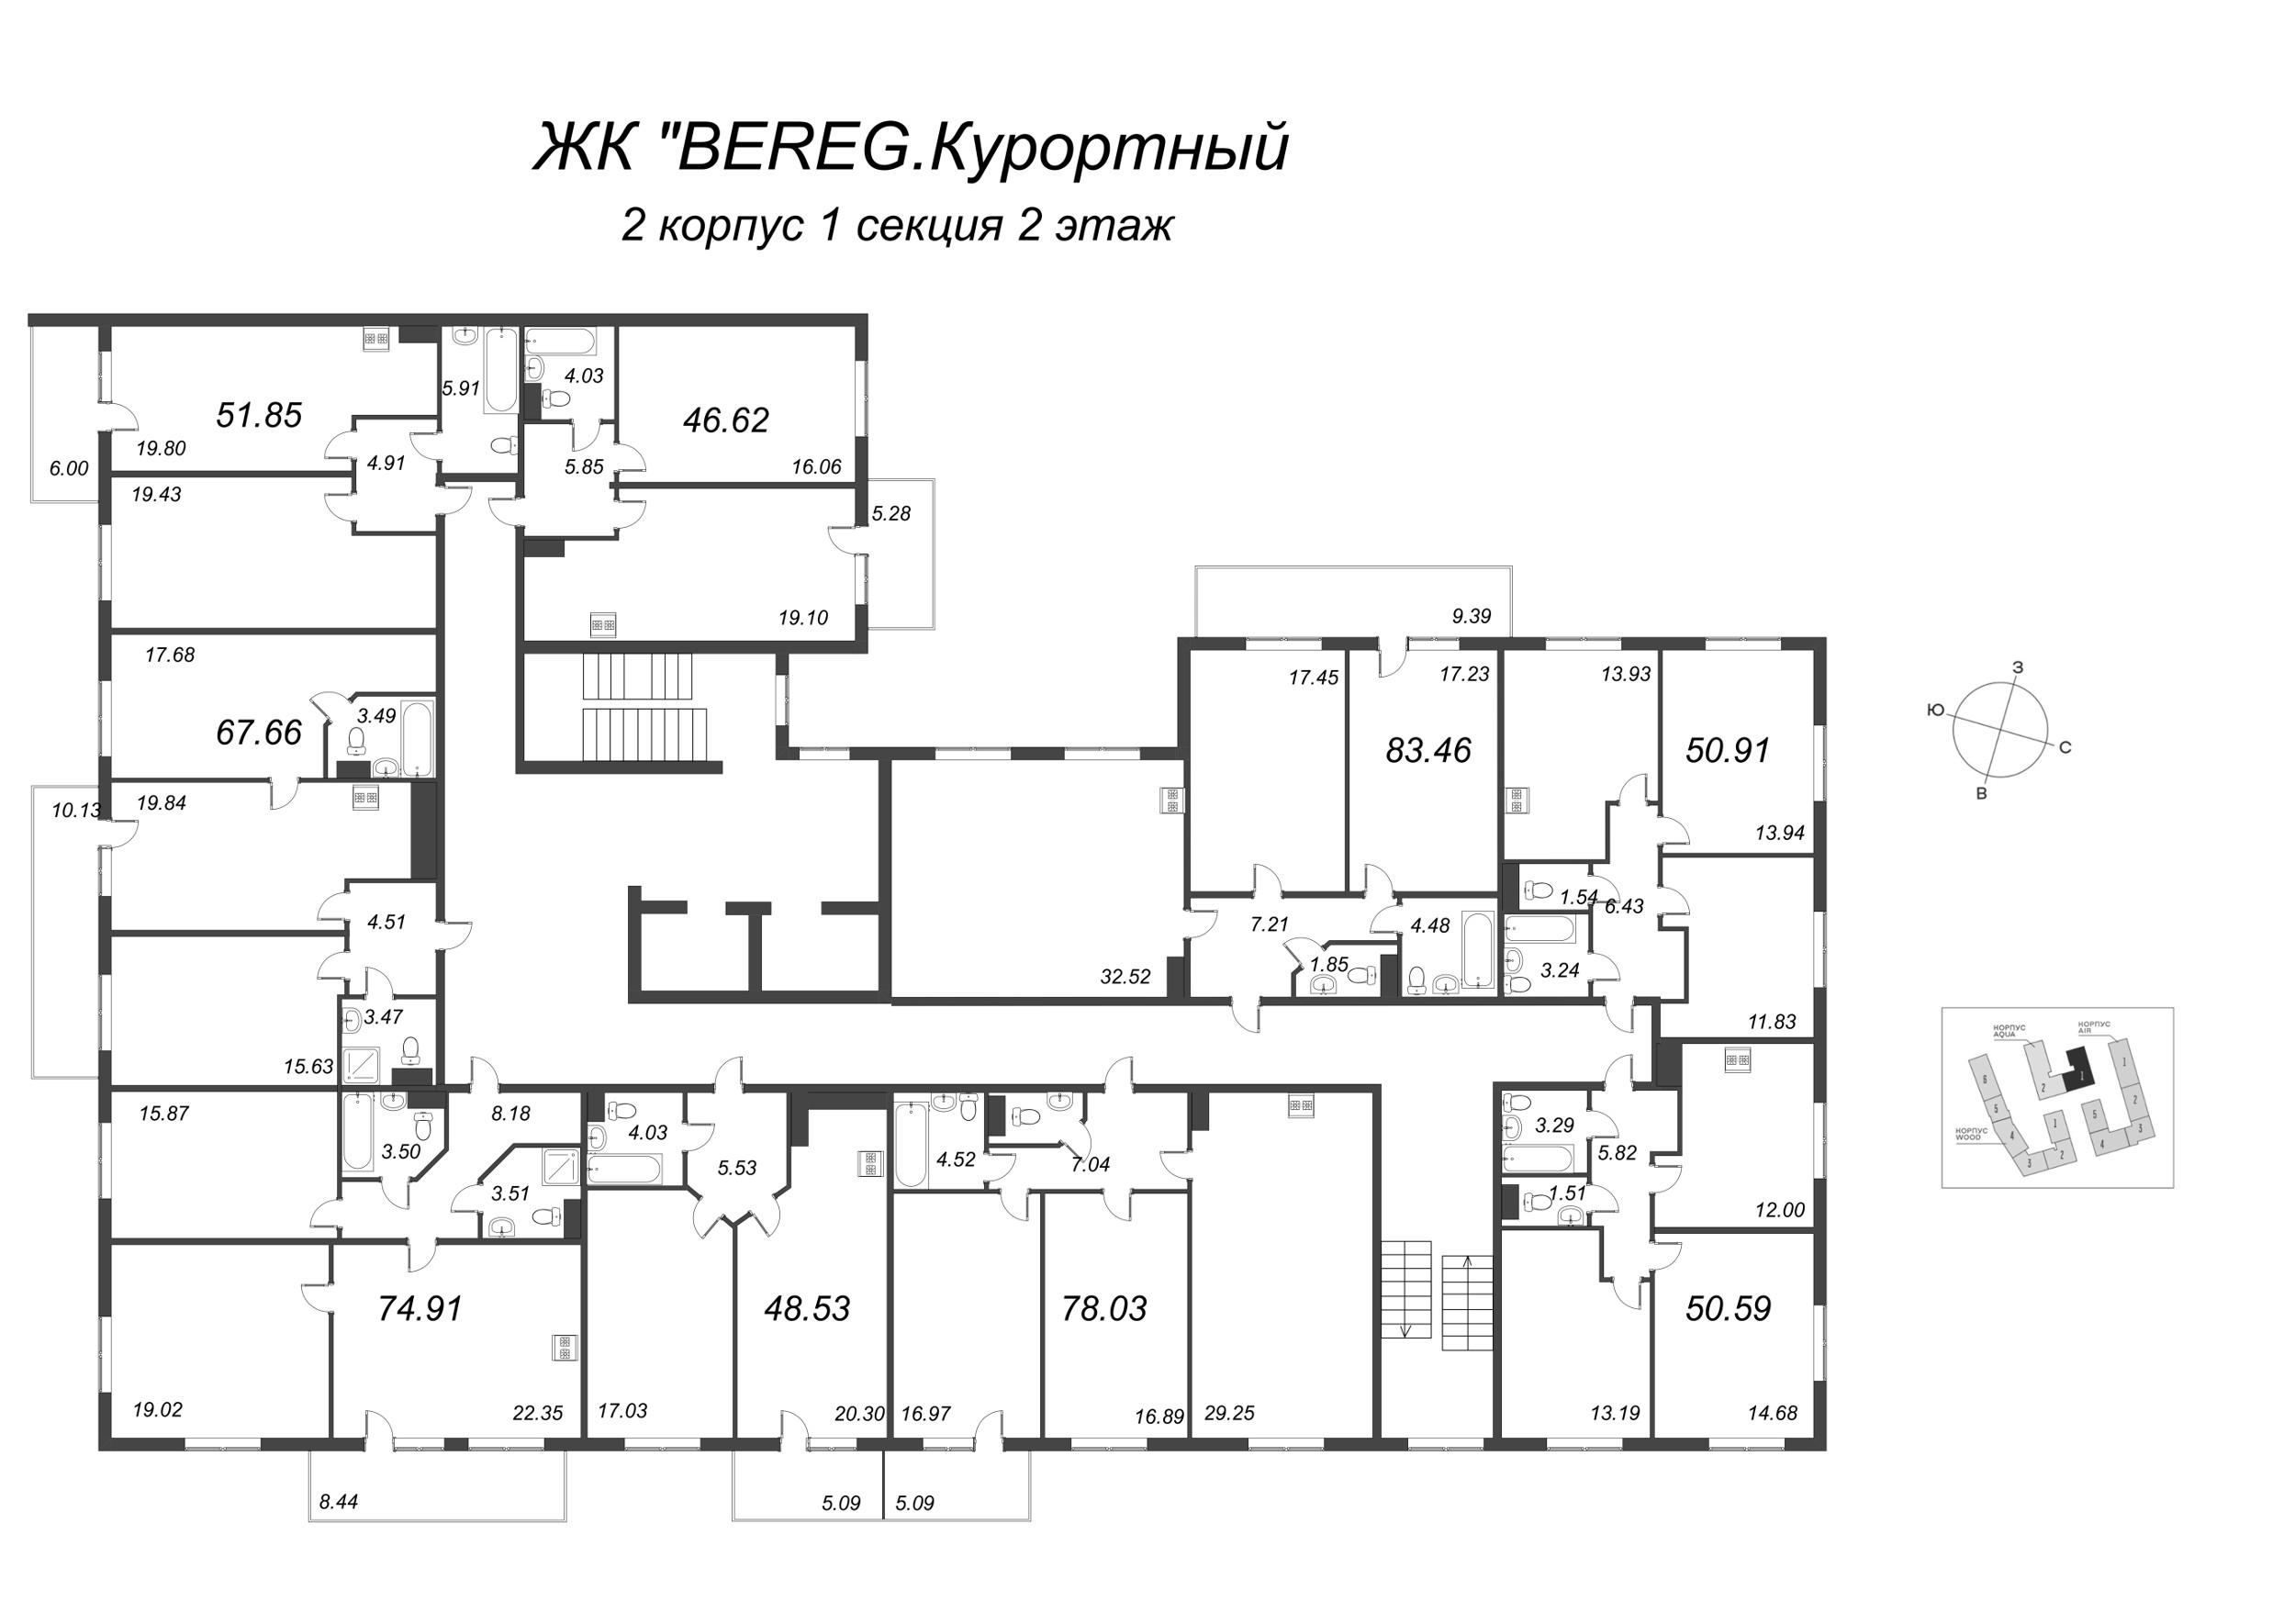 3-комнатная (Евро) квартира, 78.03 м² - планировка этажа